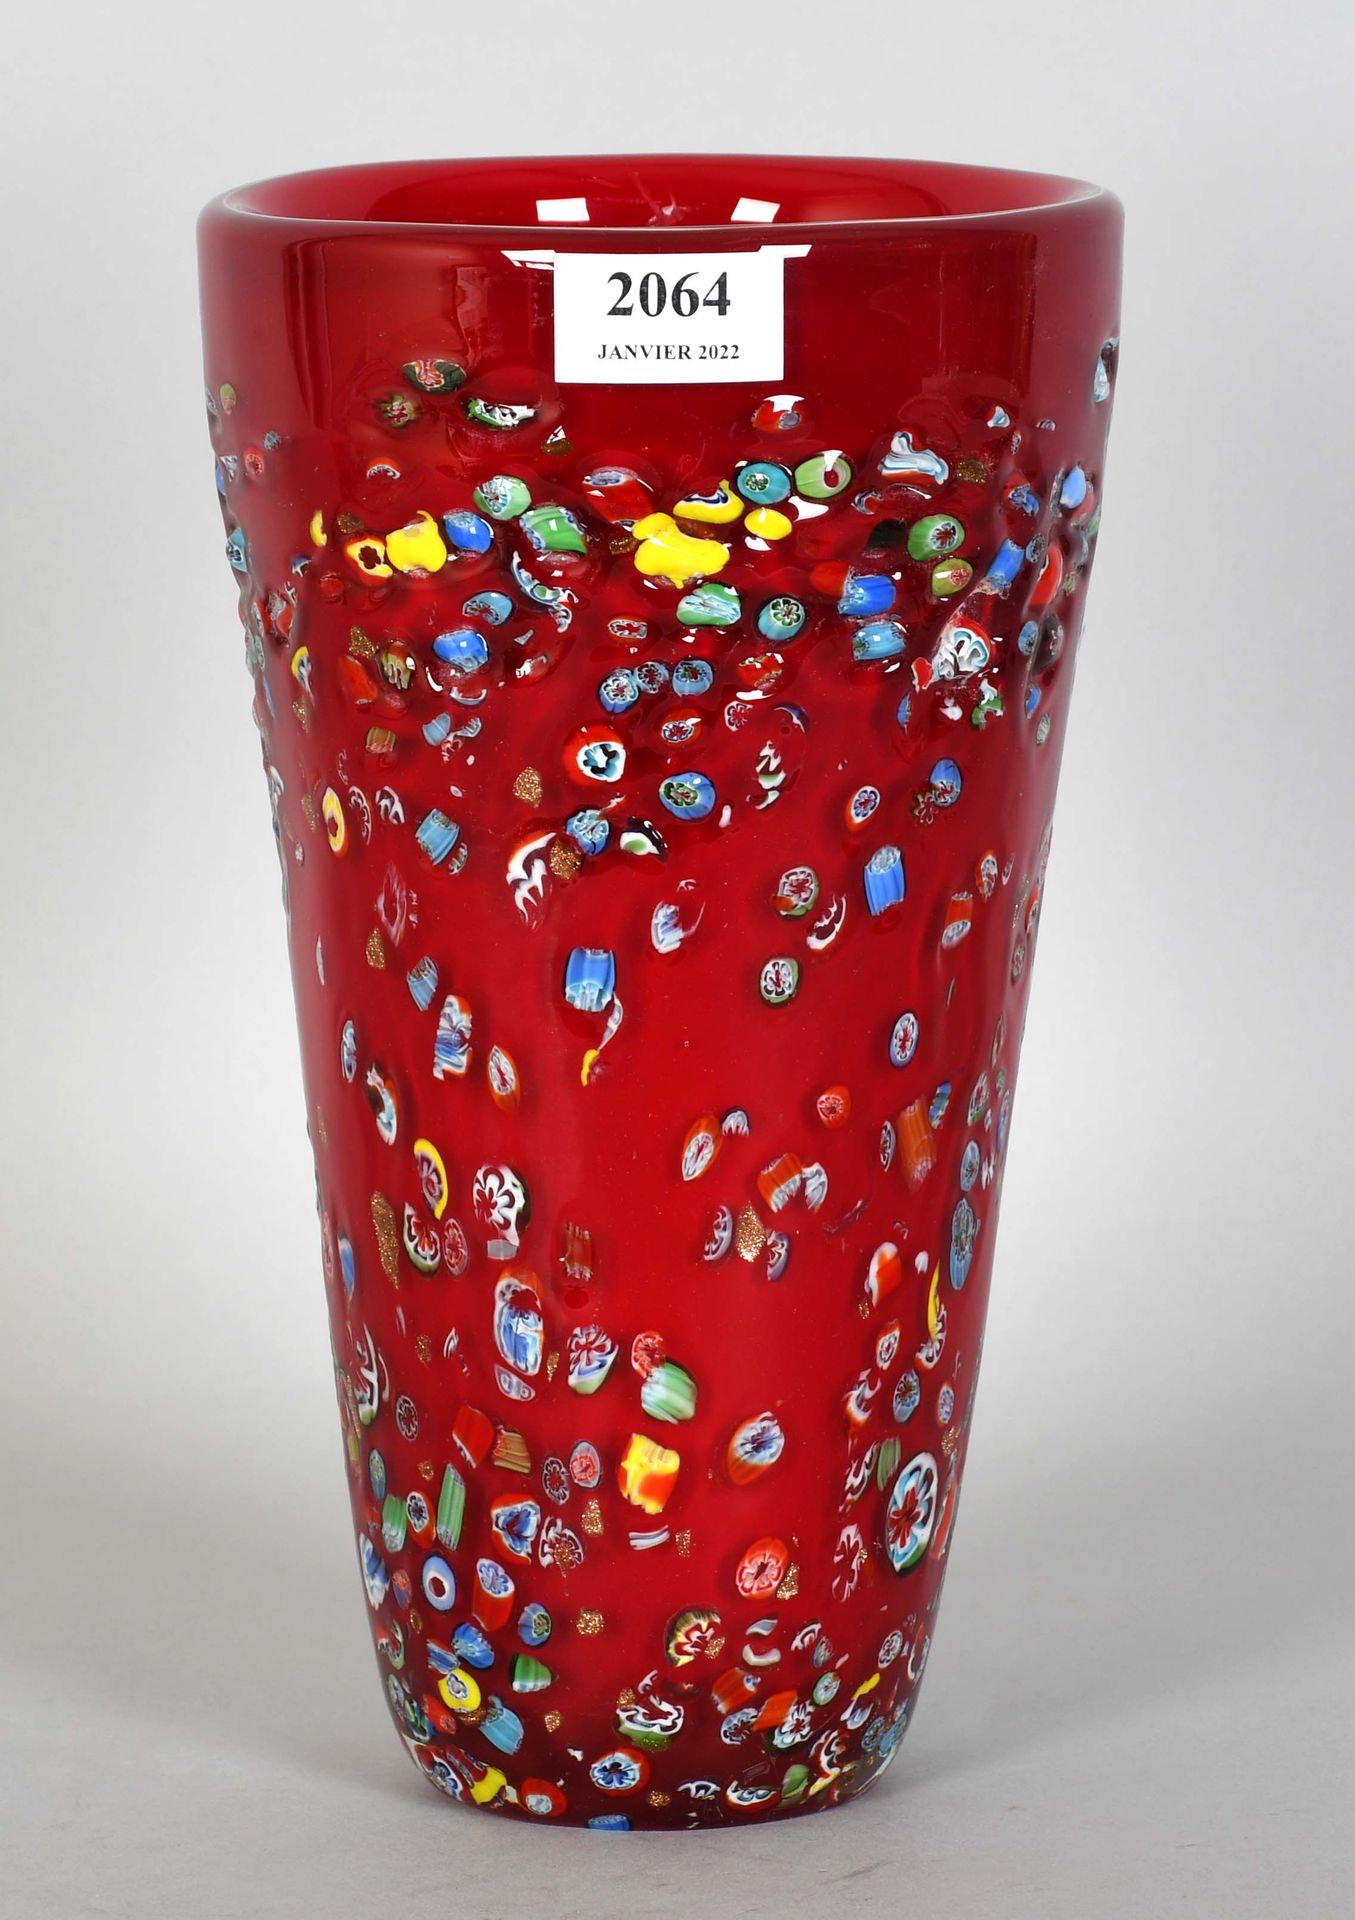 Null 红色内衬玻璃花瓶，内含五彩缤纷的糖果

高度：28厘米。